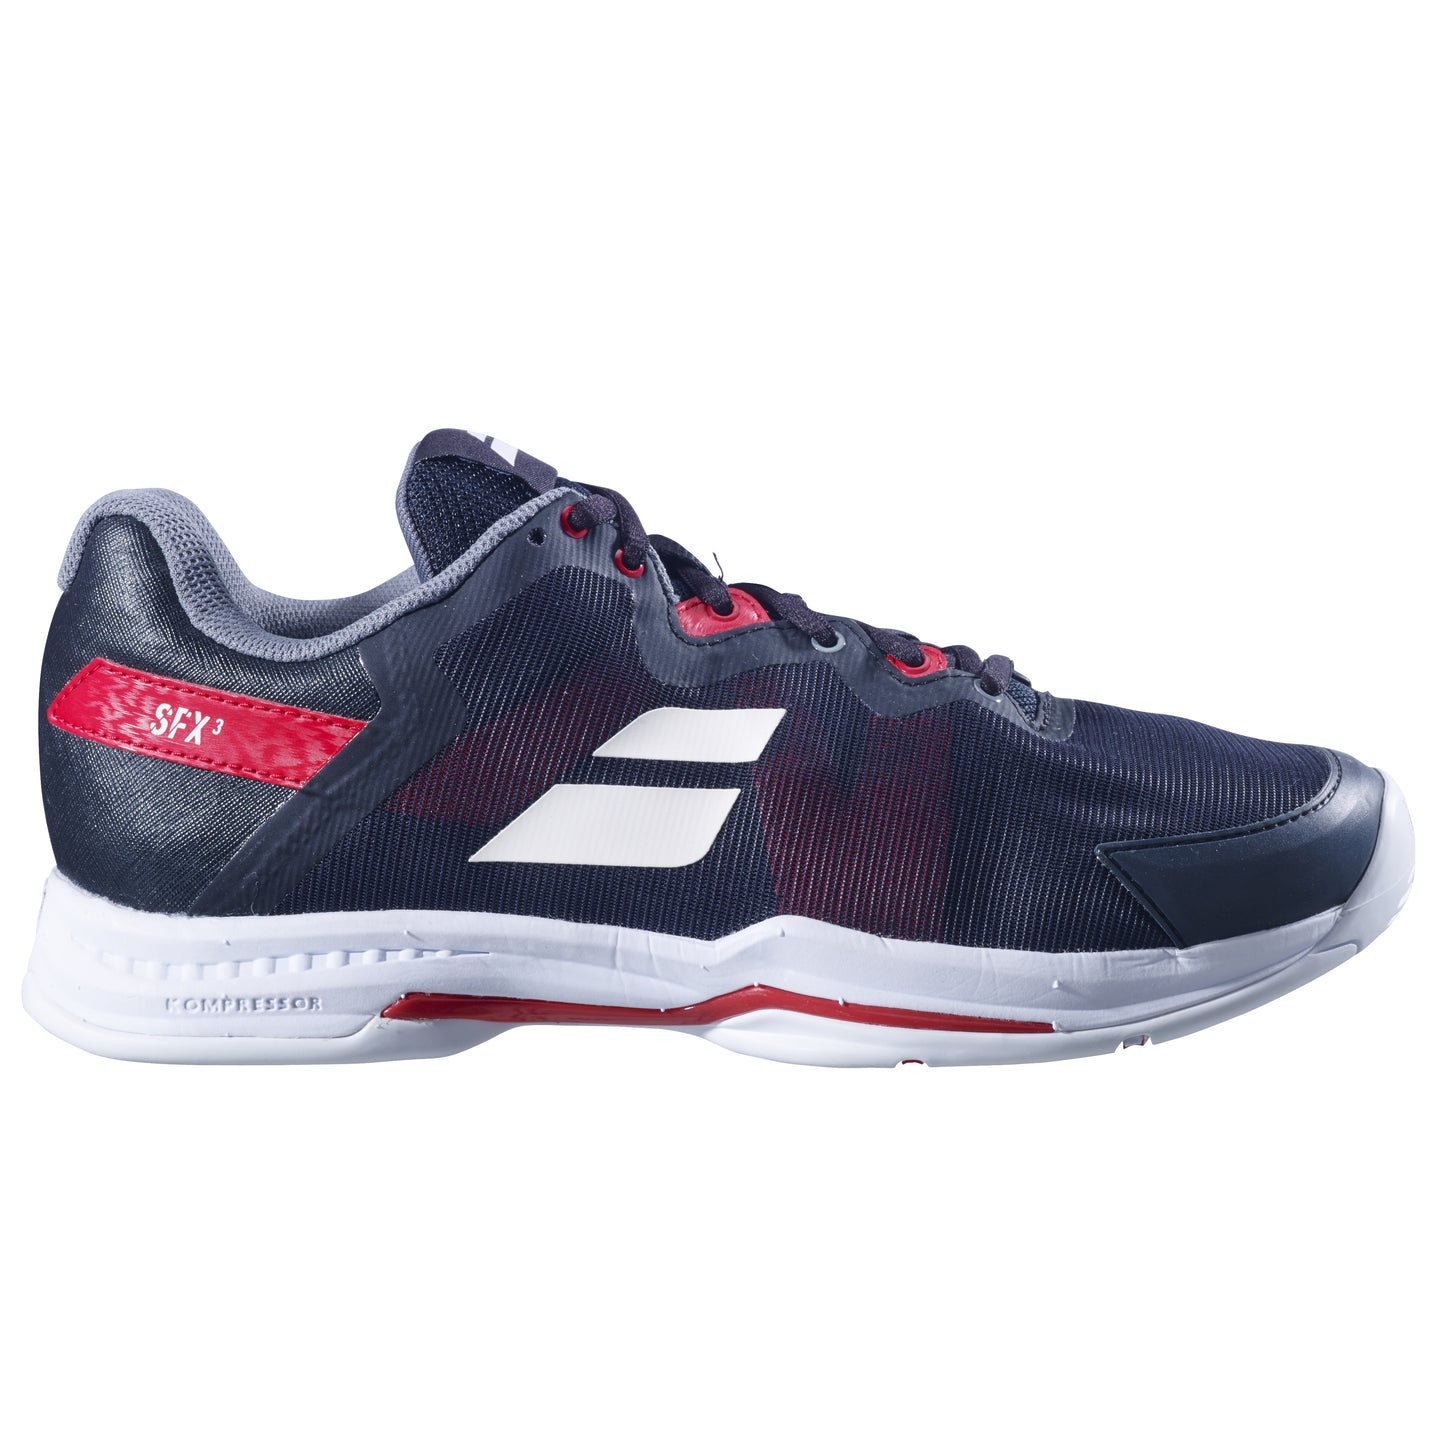 Babolat SFX3 AC men tennis shoes - Black/Red